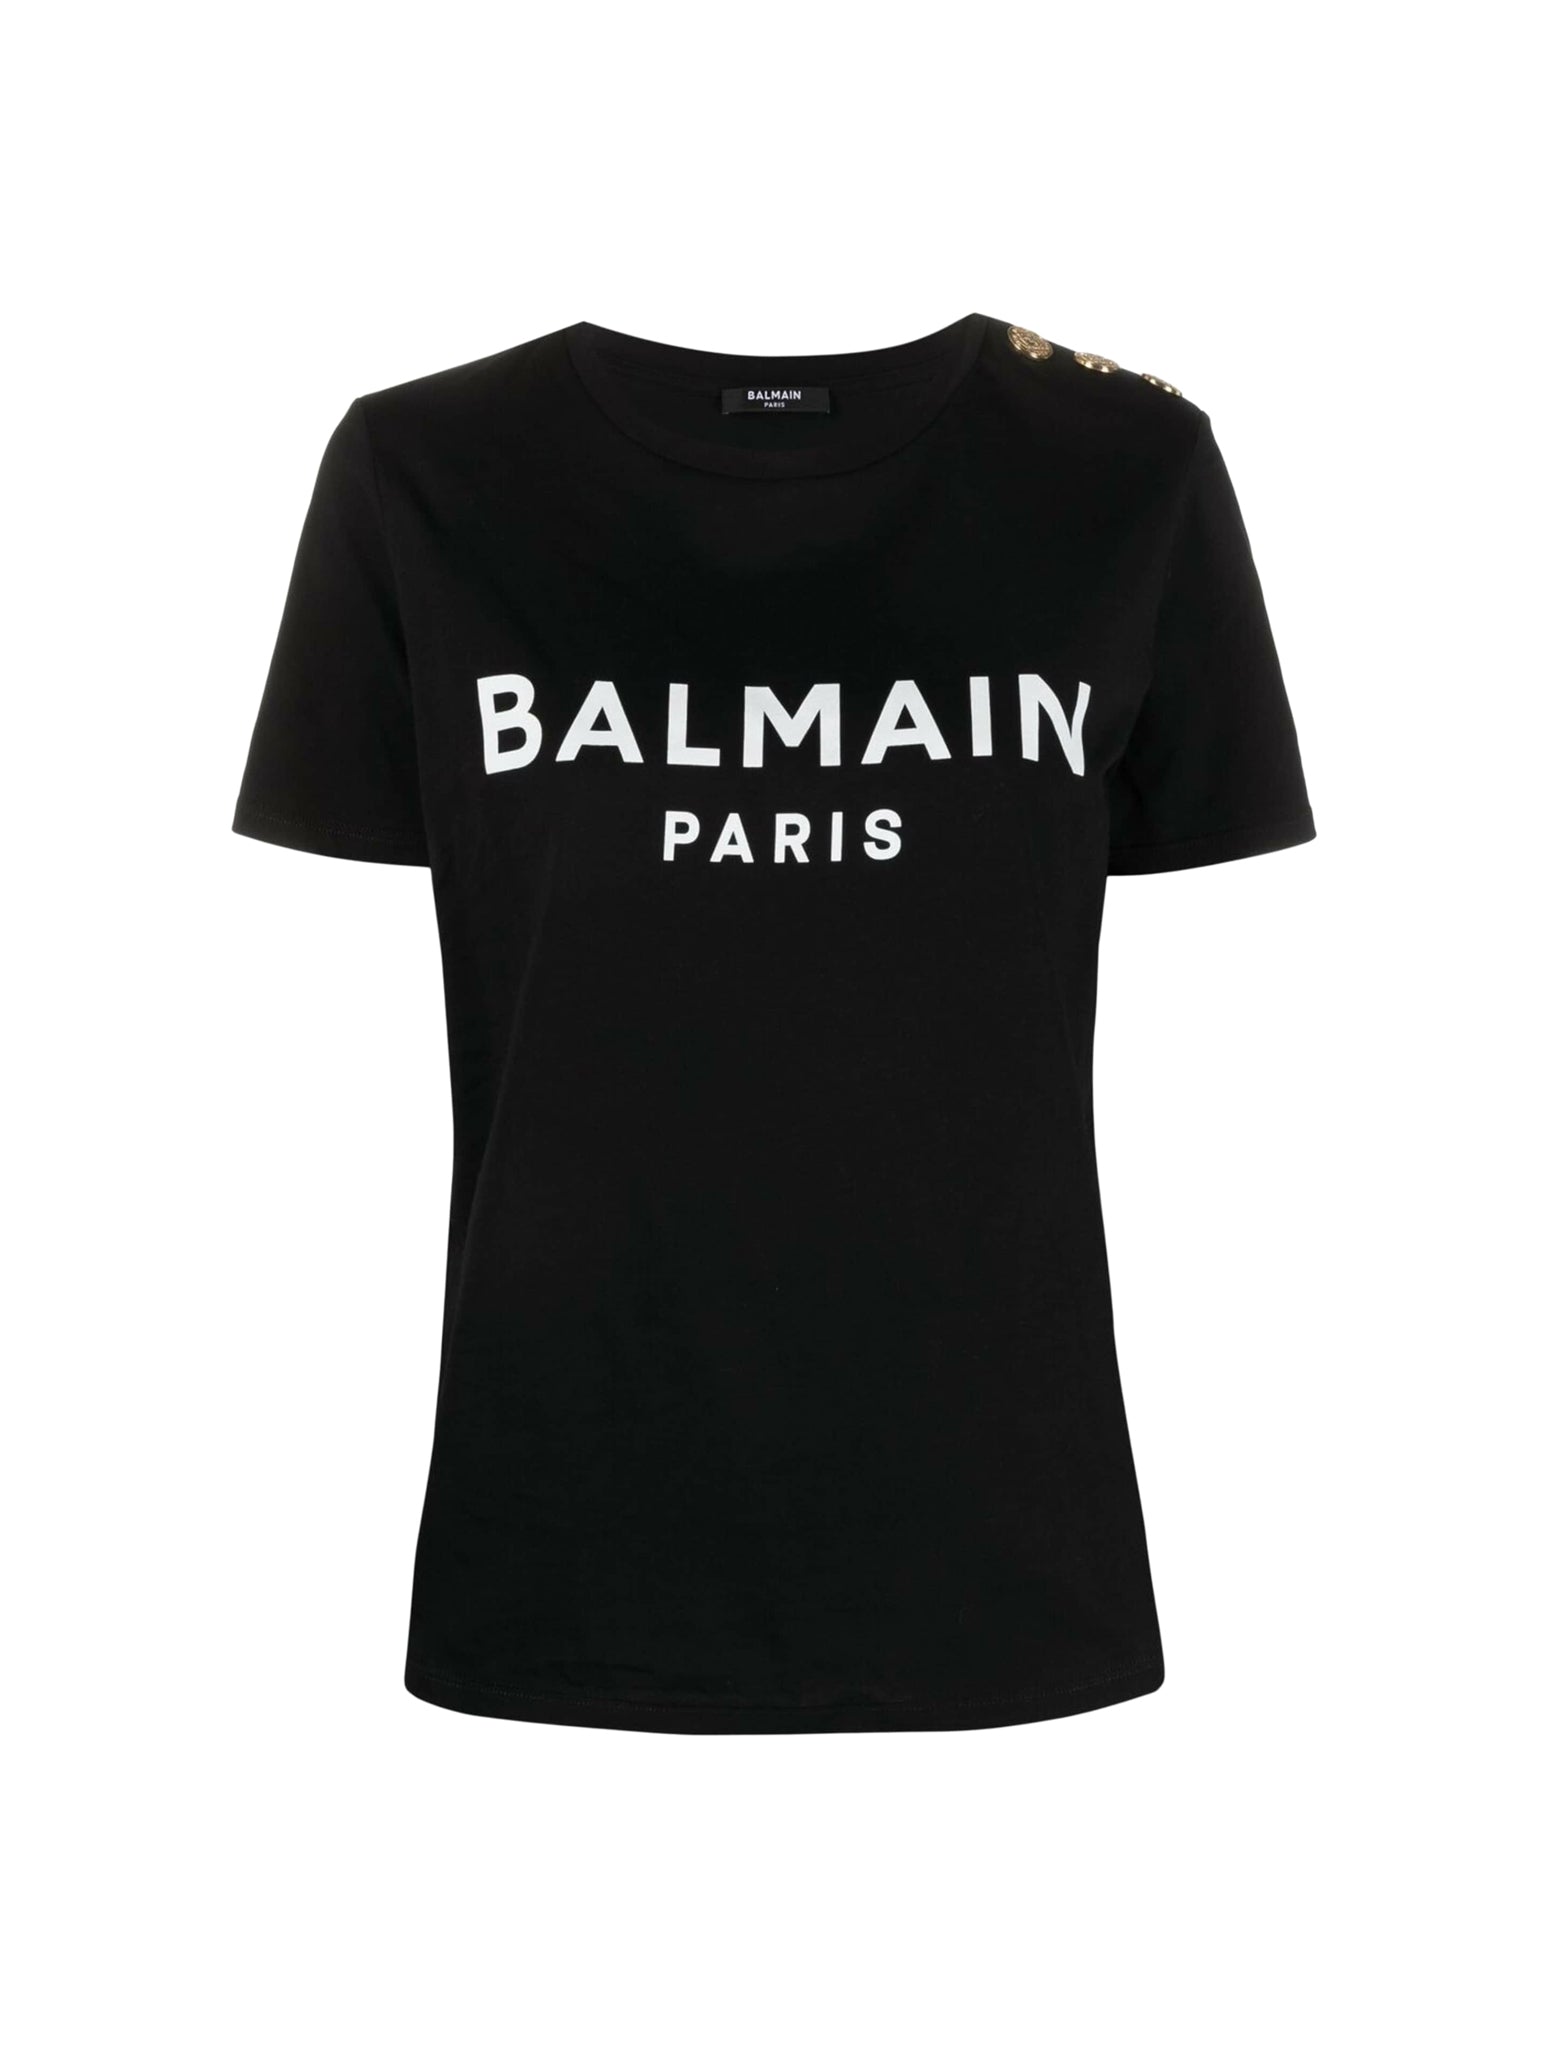 Balmain T-shirt With  Paris Print In Metallic